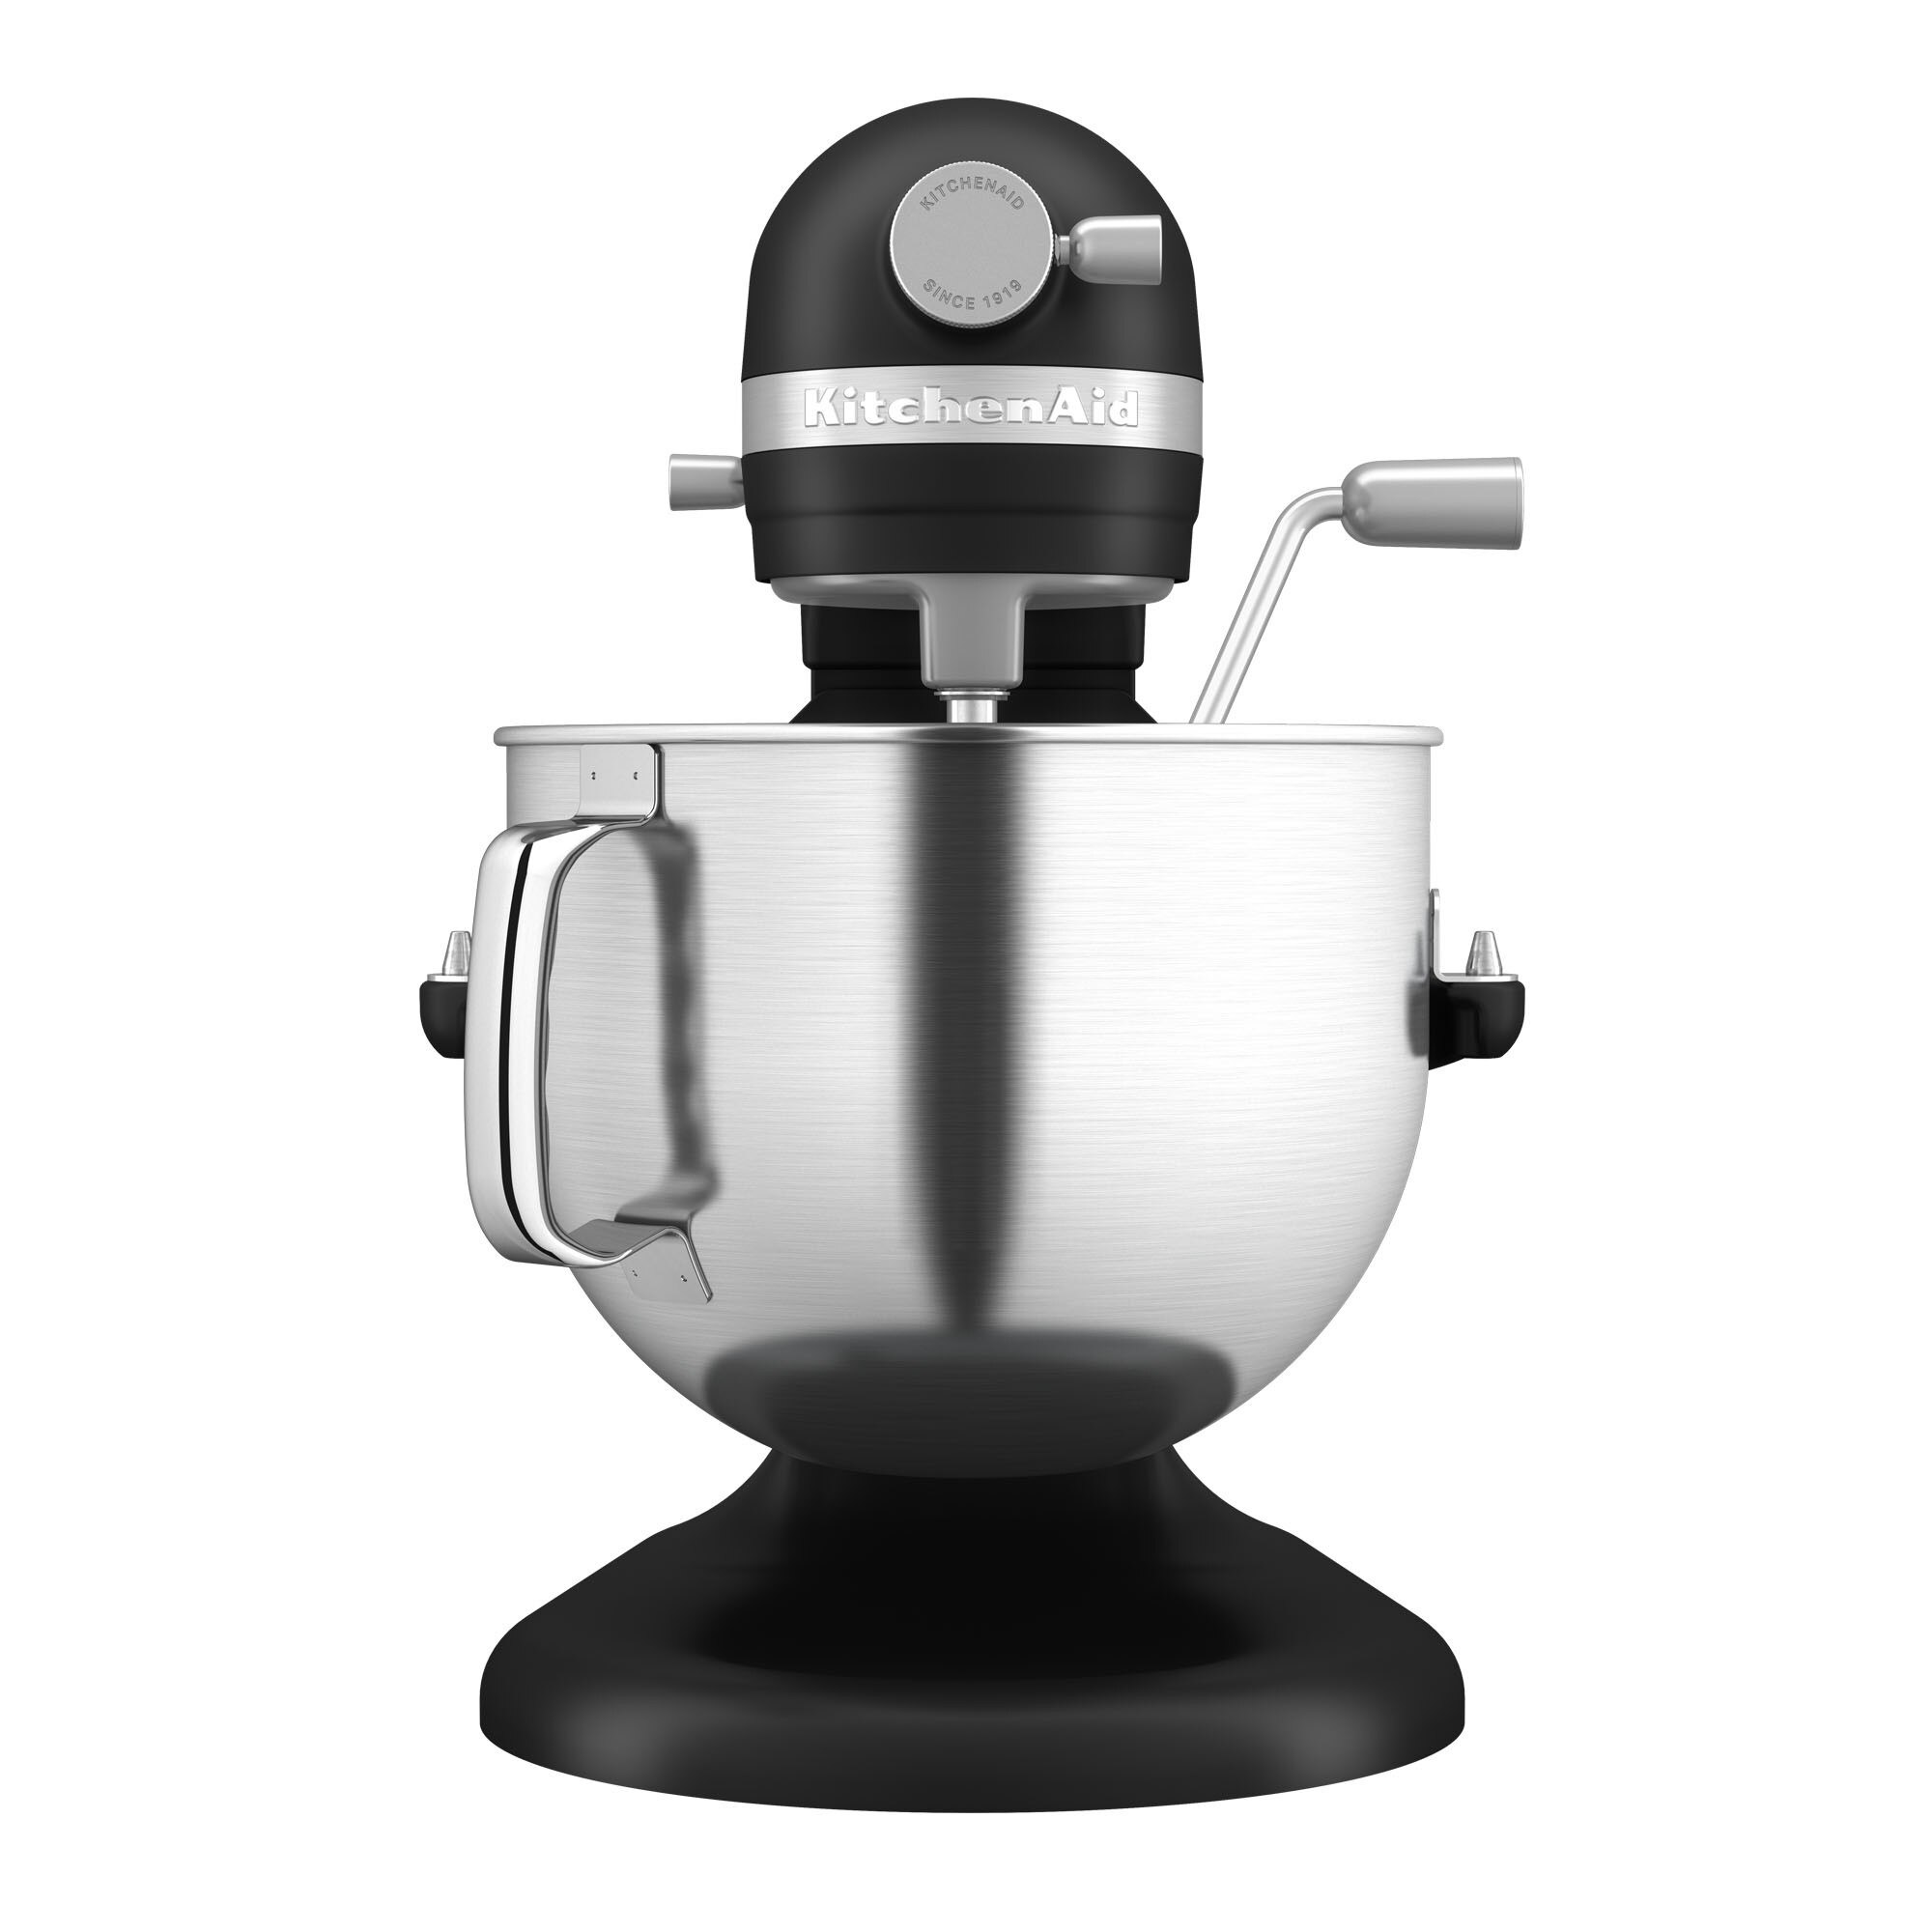 Artisan kitchen mixer, model 7580, 6.9L, Onyx Black - KitchenAid